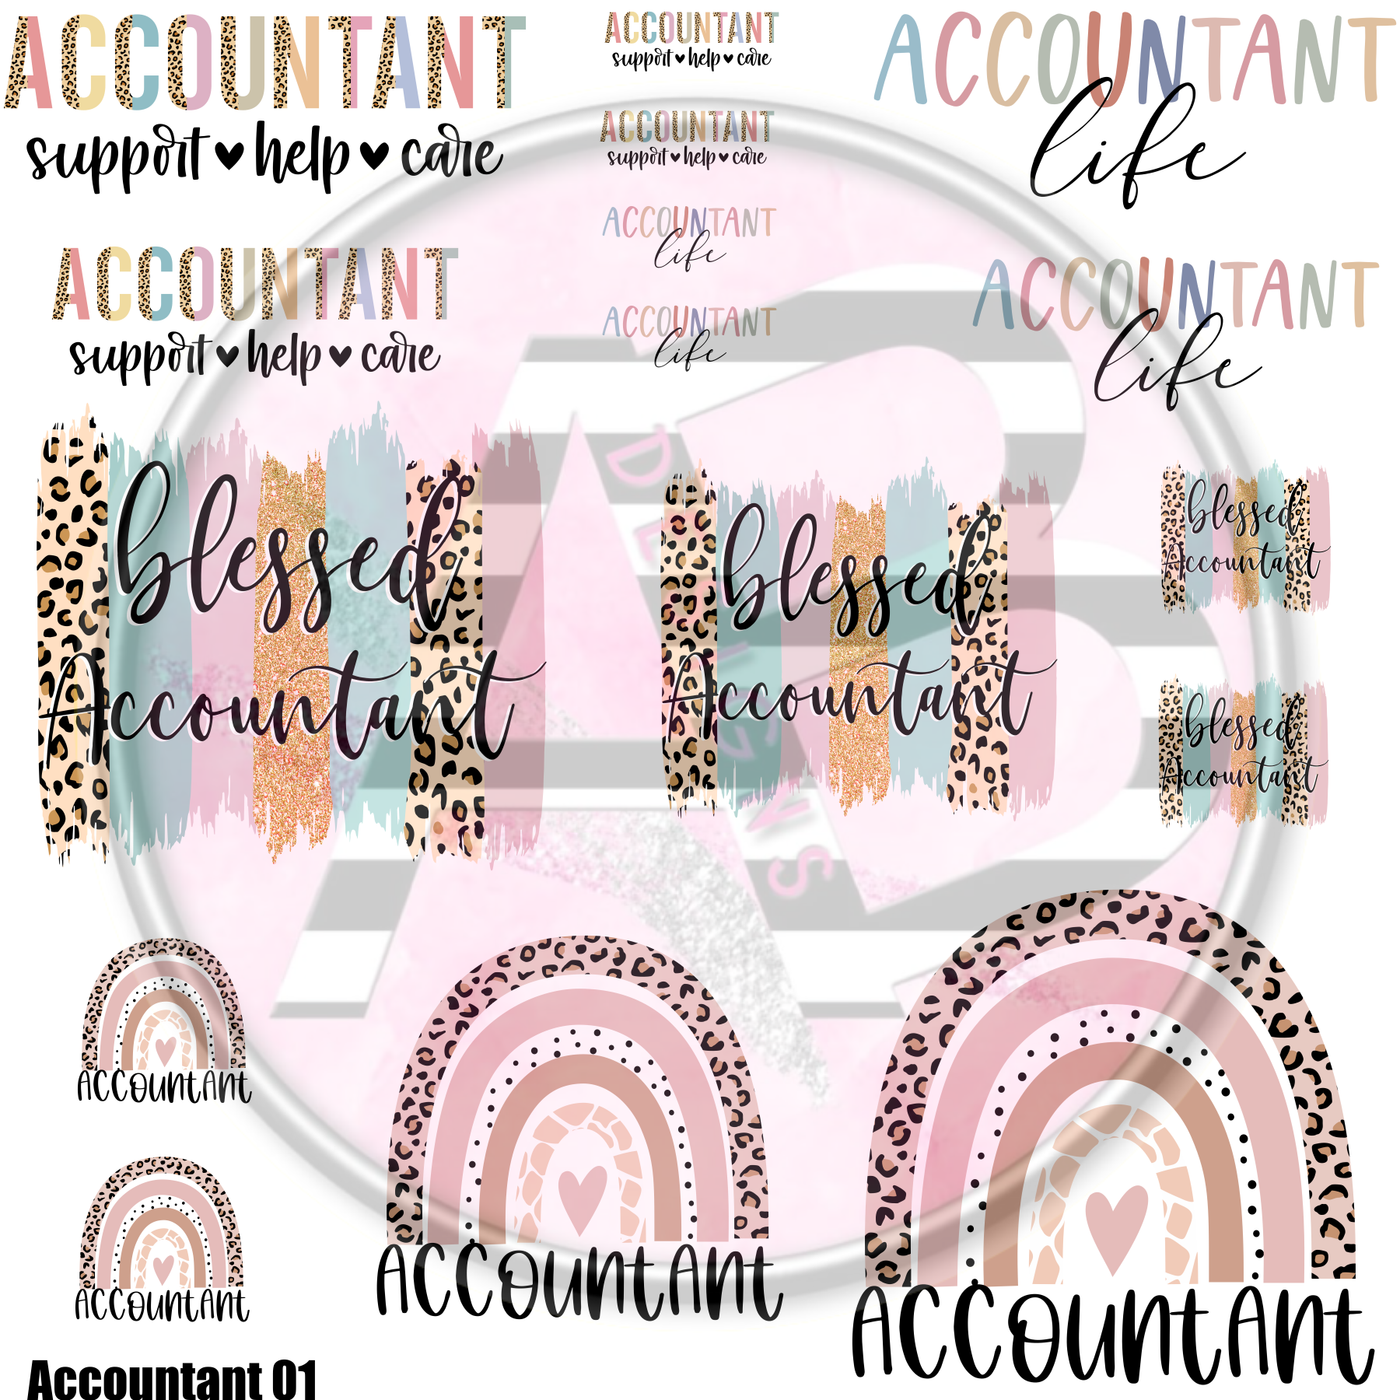 Accountant 01 12 x 12 Clear Cast Full Sheet